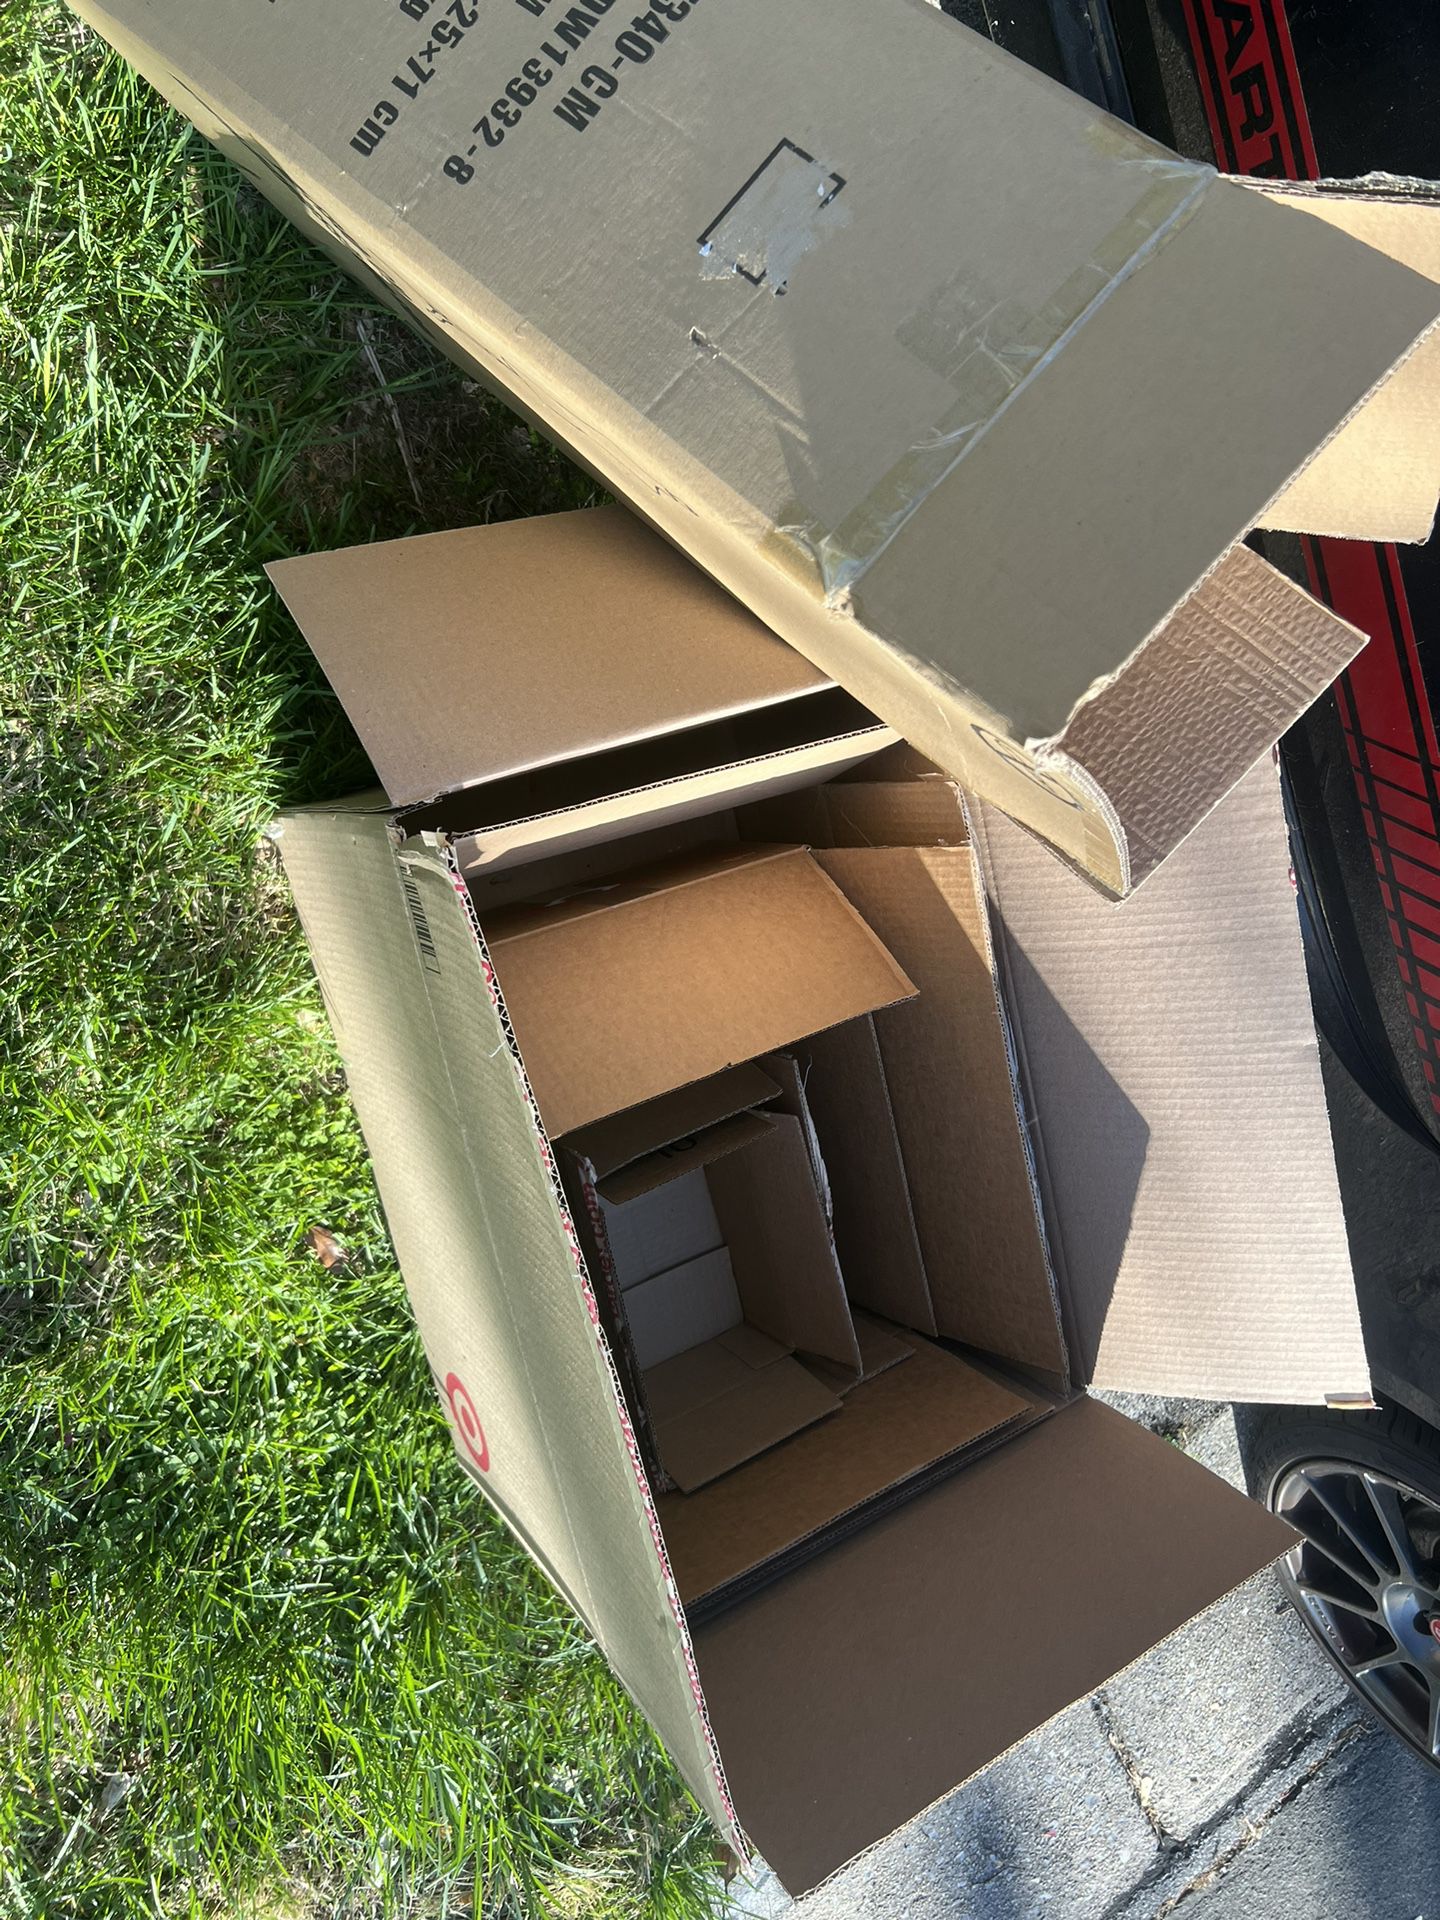 Cardboard Boxes - Free